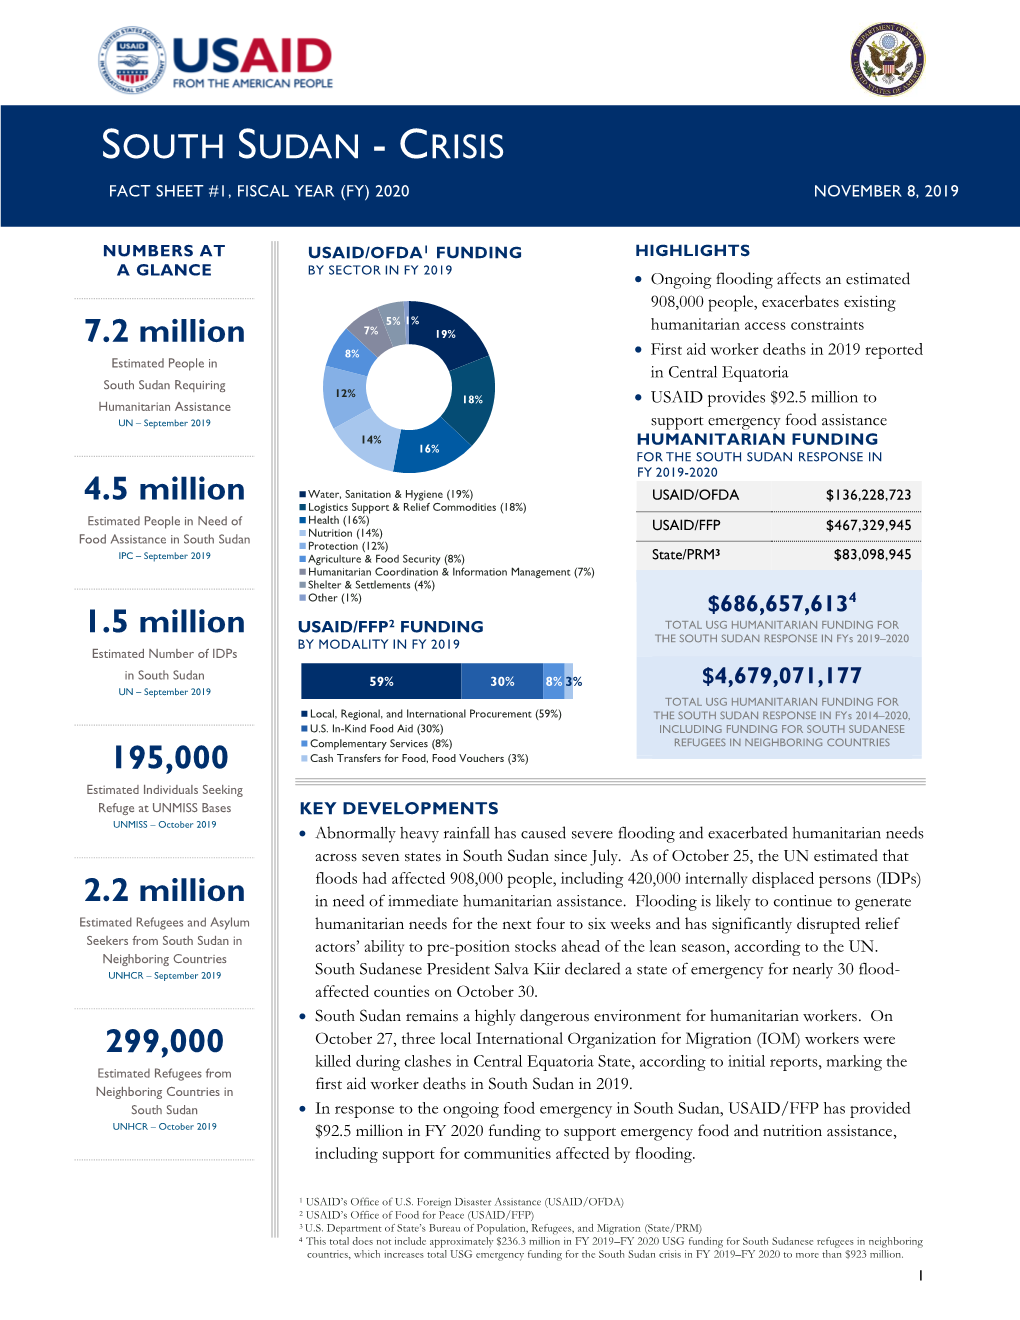 South Sudan Crisis Fact Sheet #1